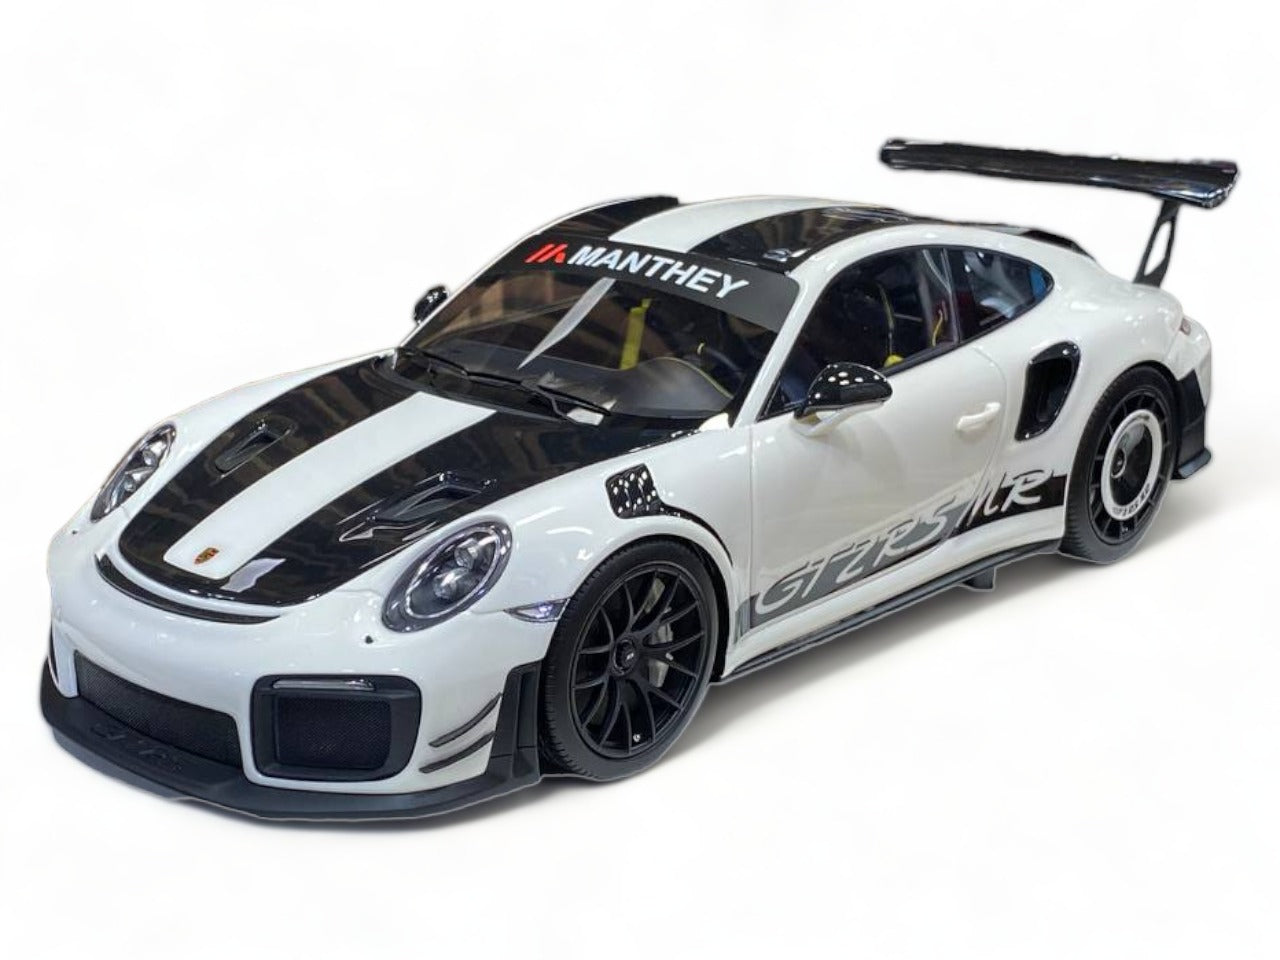 1/18 DINO Porsche 911 GT2 RS in Luminous Blue  Limited Edition|Sold in Dturman.com Dubai UAE.